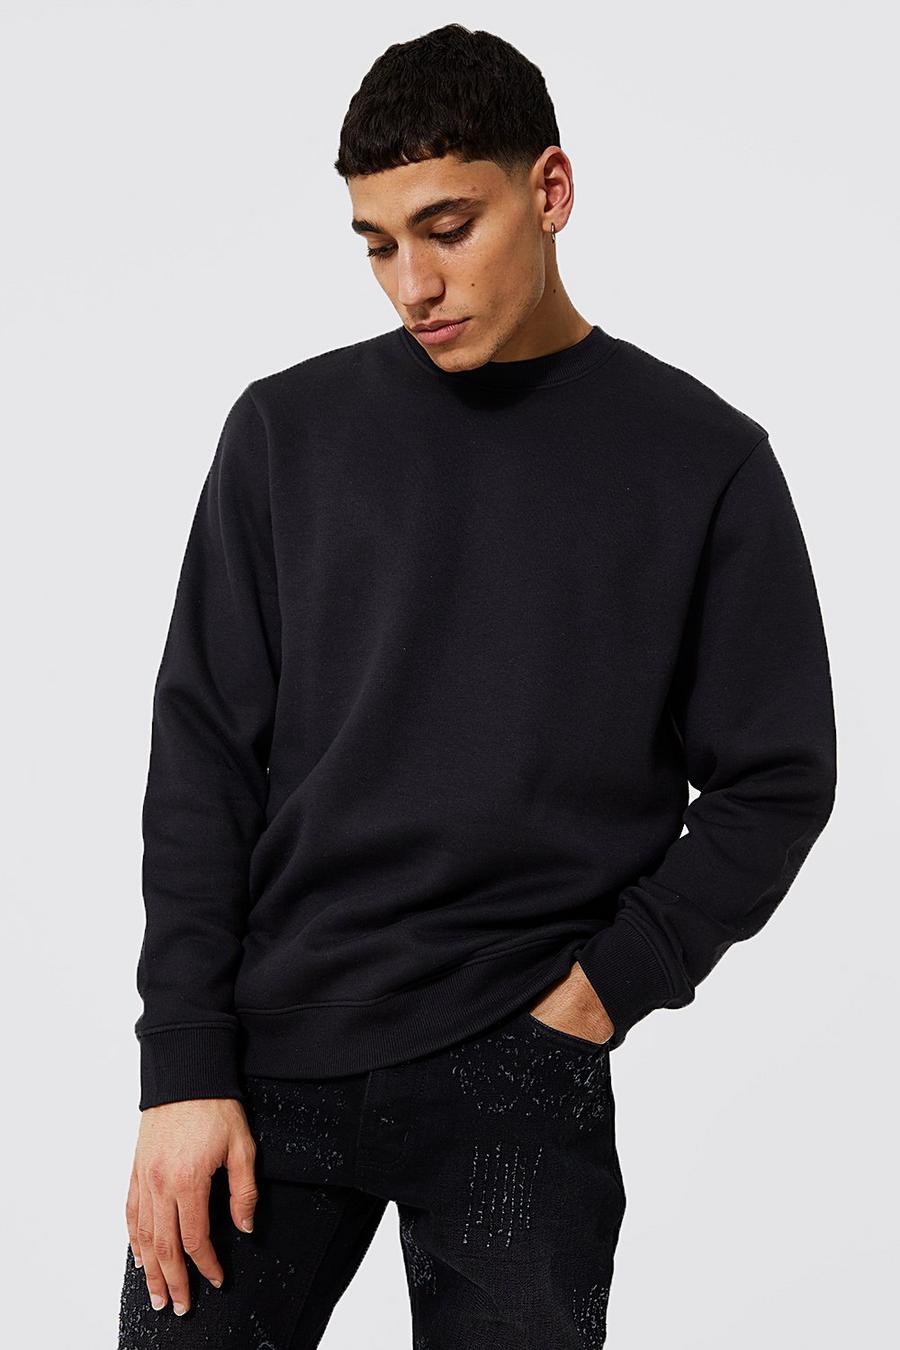 Black Basic Crew Neck Sweatshirt With Cotton